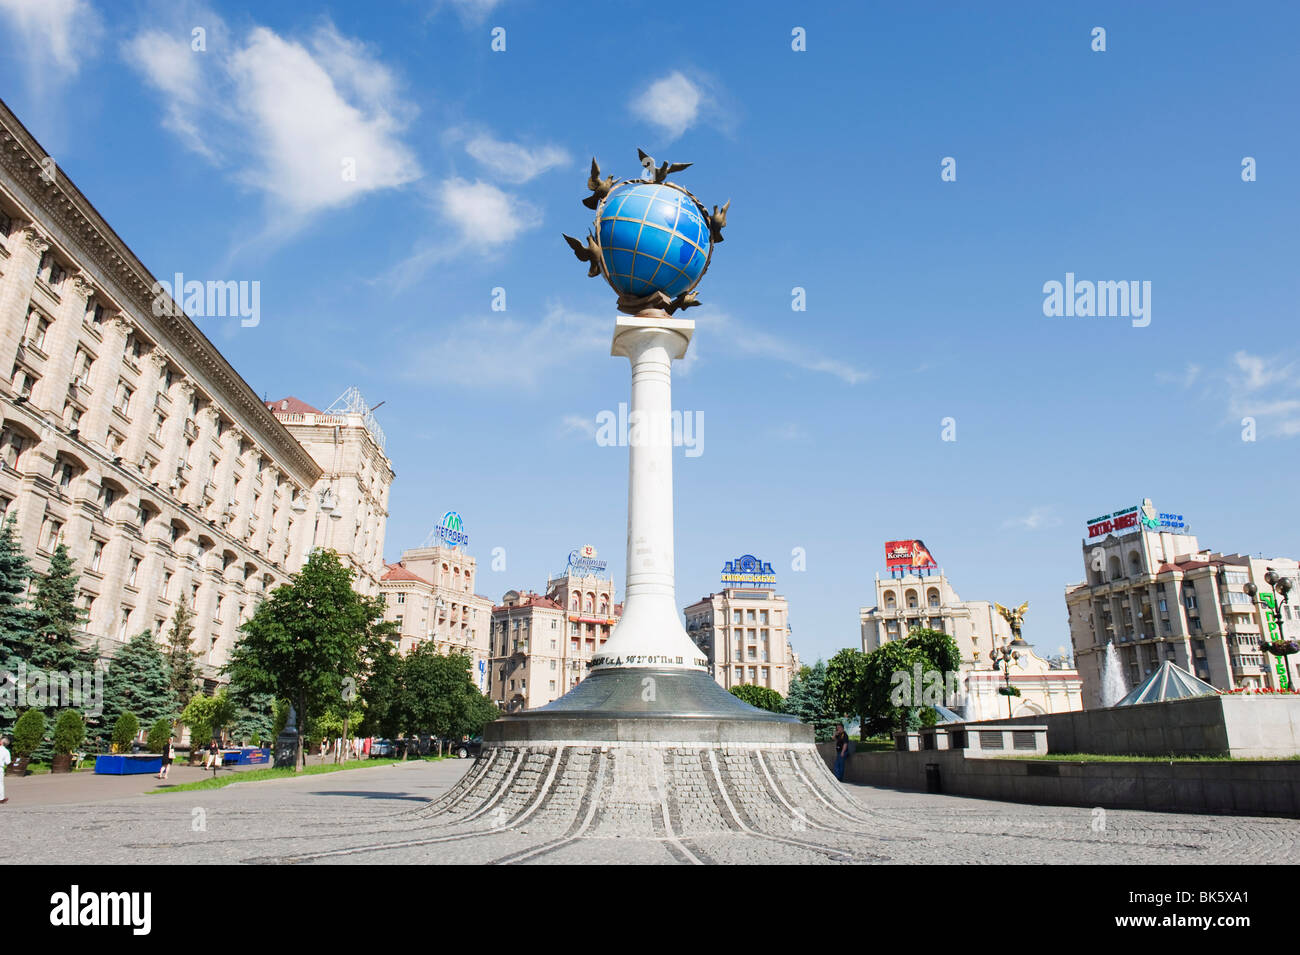 Satue of a blue globe with doves of peace, Maidan Nezalezhnosti (Independence Square), Kiev, Ukraine, Europe Stock Photo